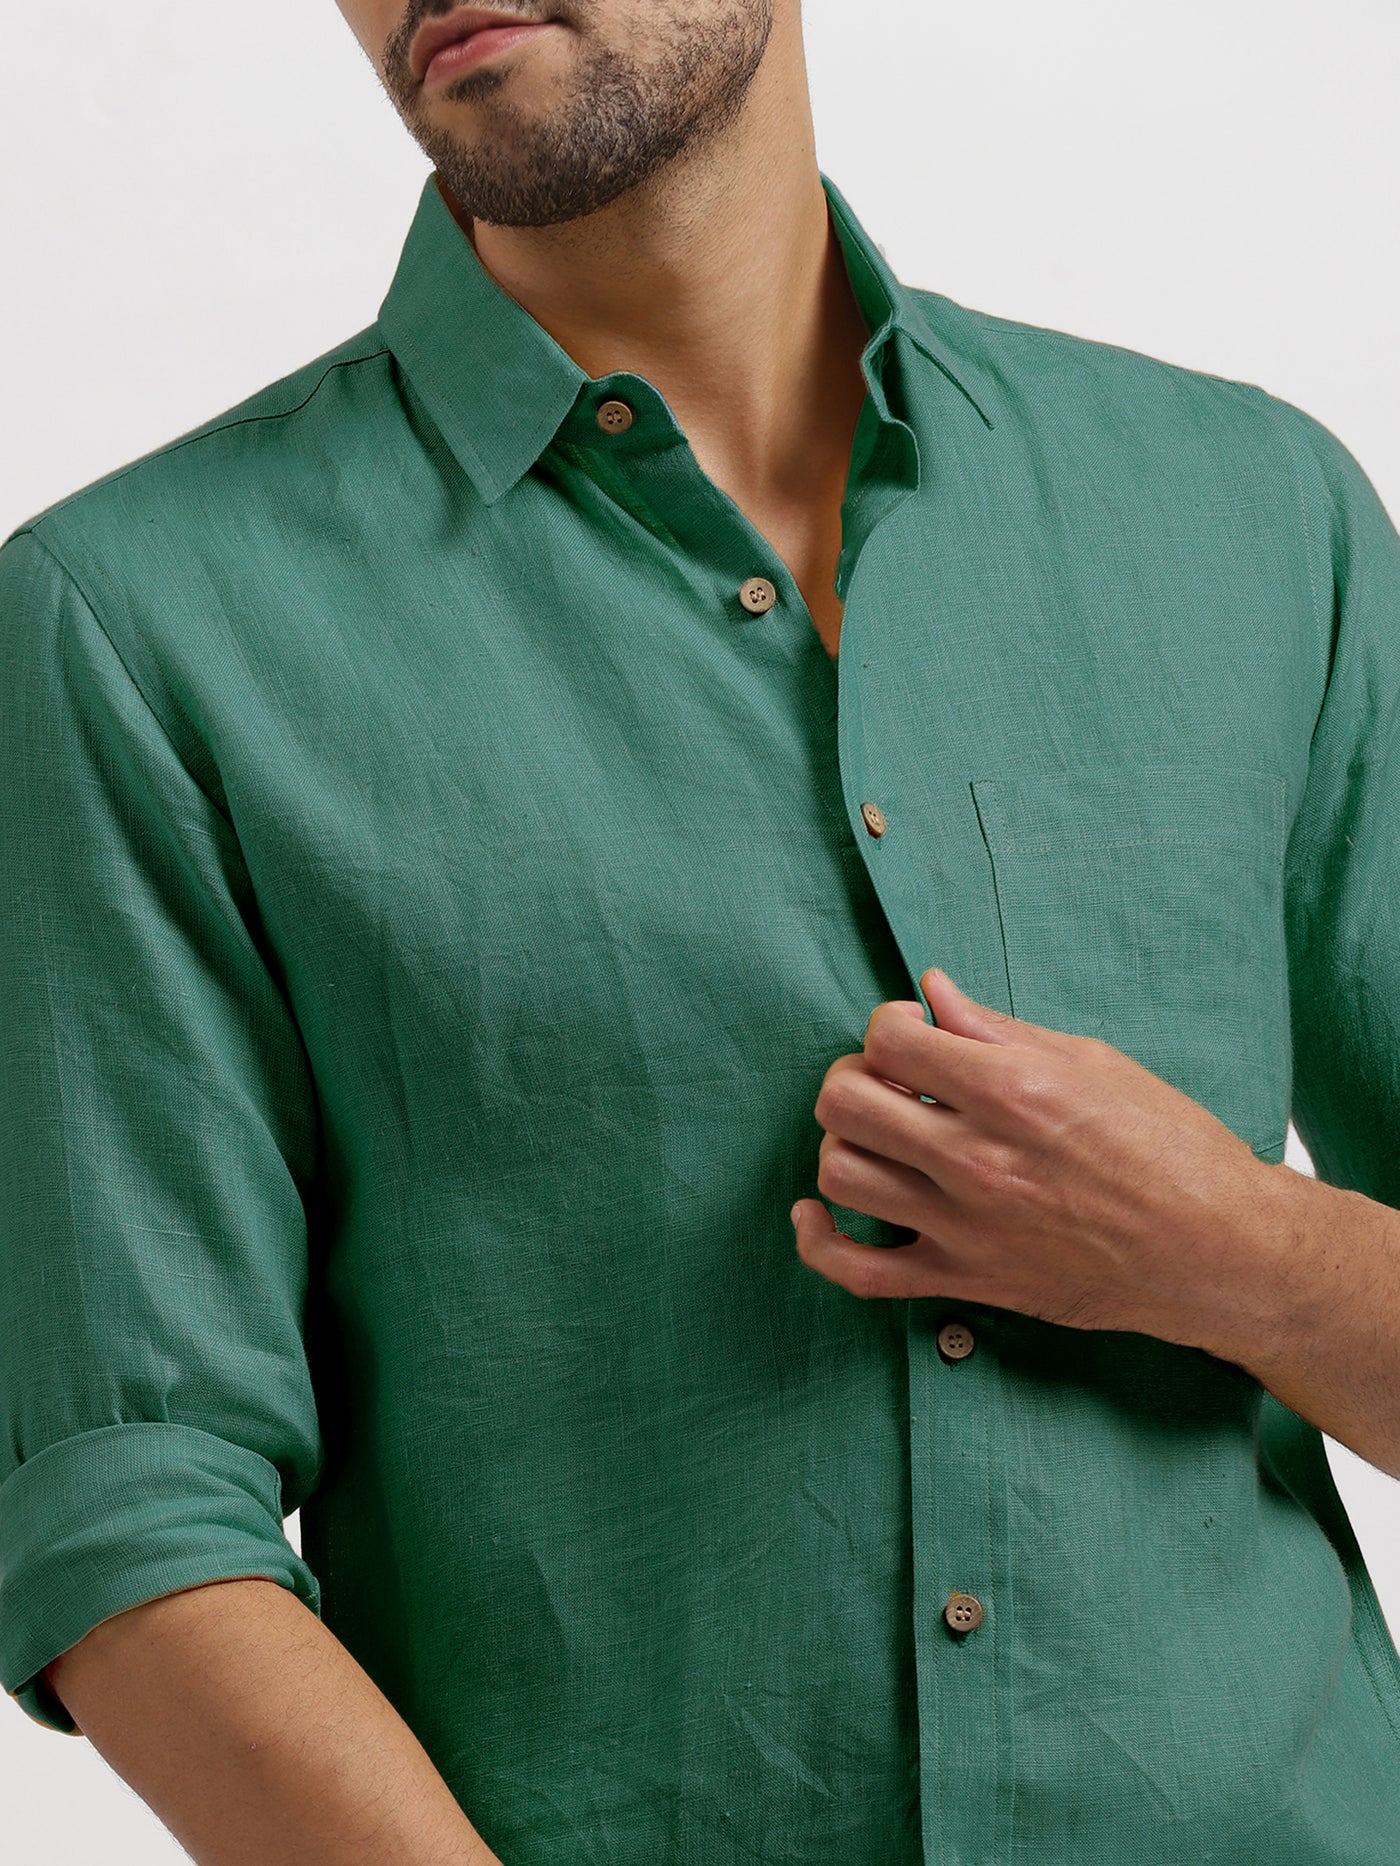 Harvey - Pure Linen Full Sleeve Shirt - Teal Green